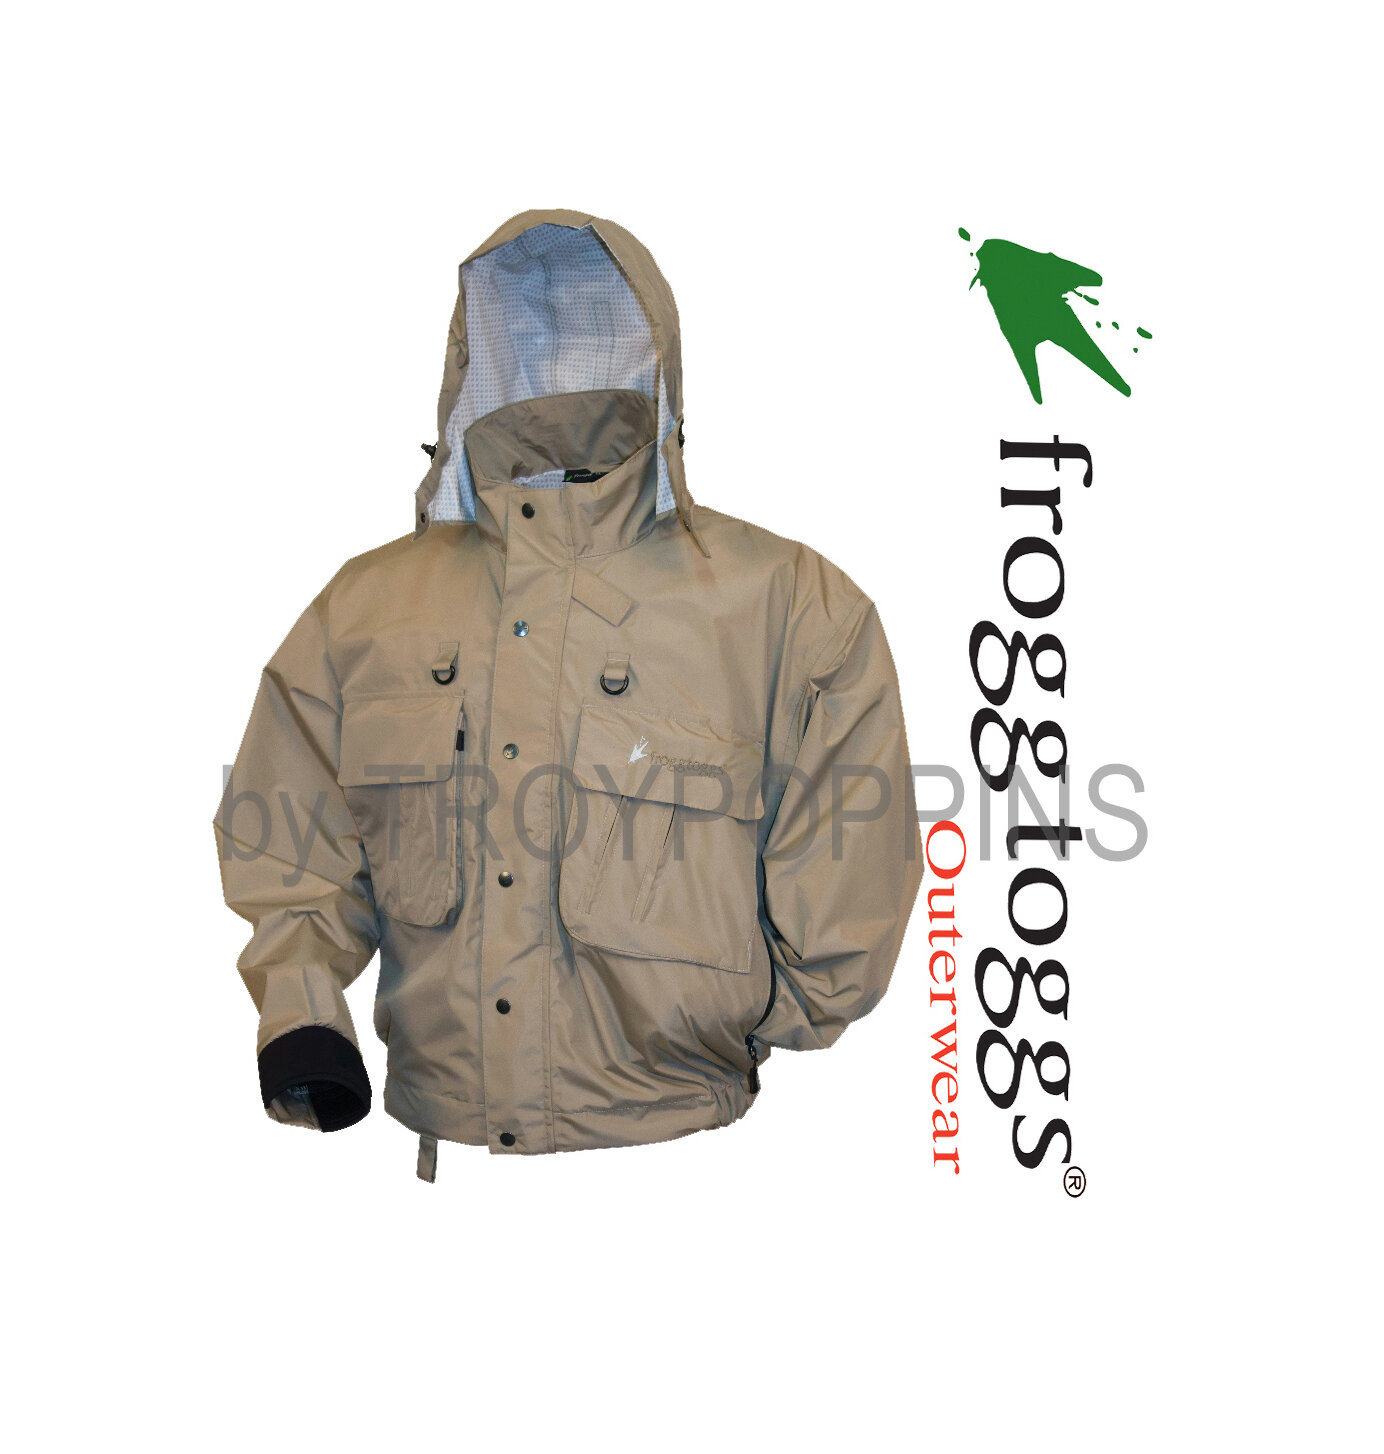 FROGG TOGGS Tekk Toad Breathable Rain/Wading Jacket 